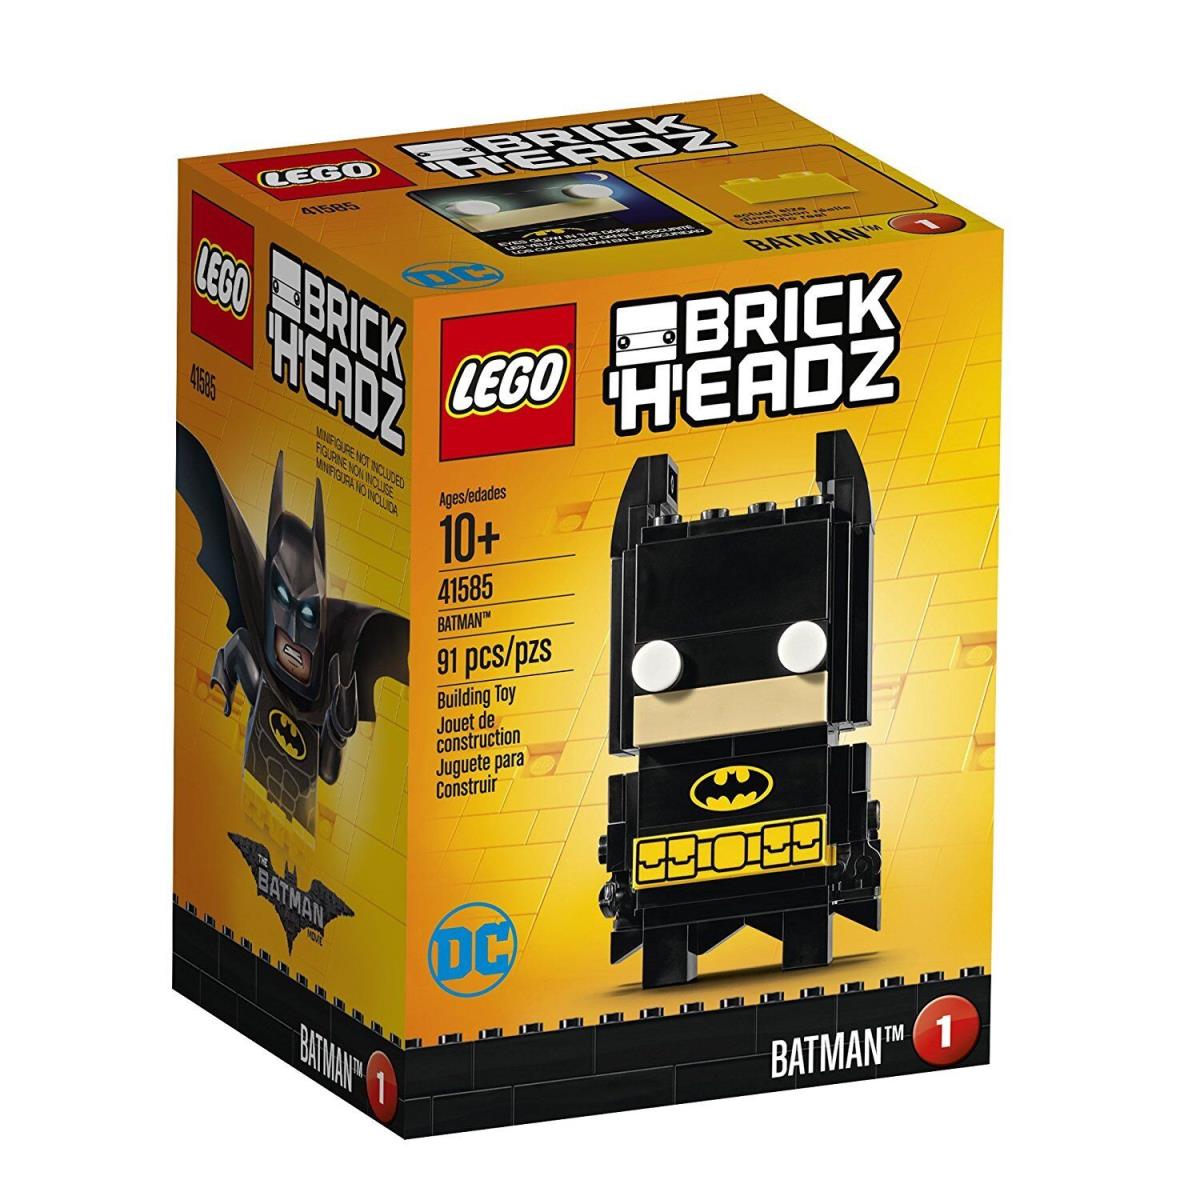 Lego Brickheadz Batman Building Kit Construction Character Figure Set Gift Toy